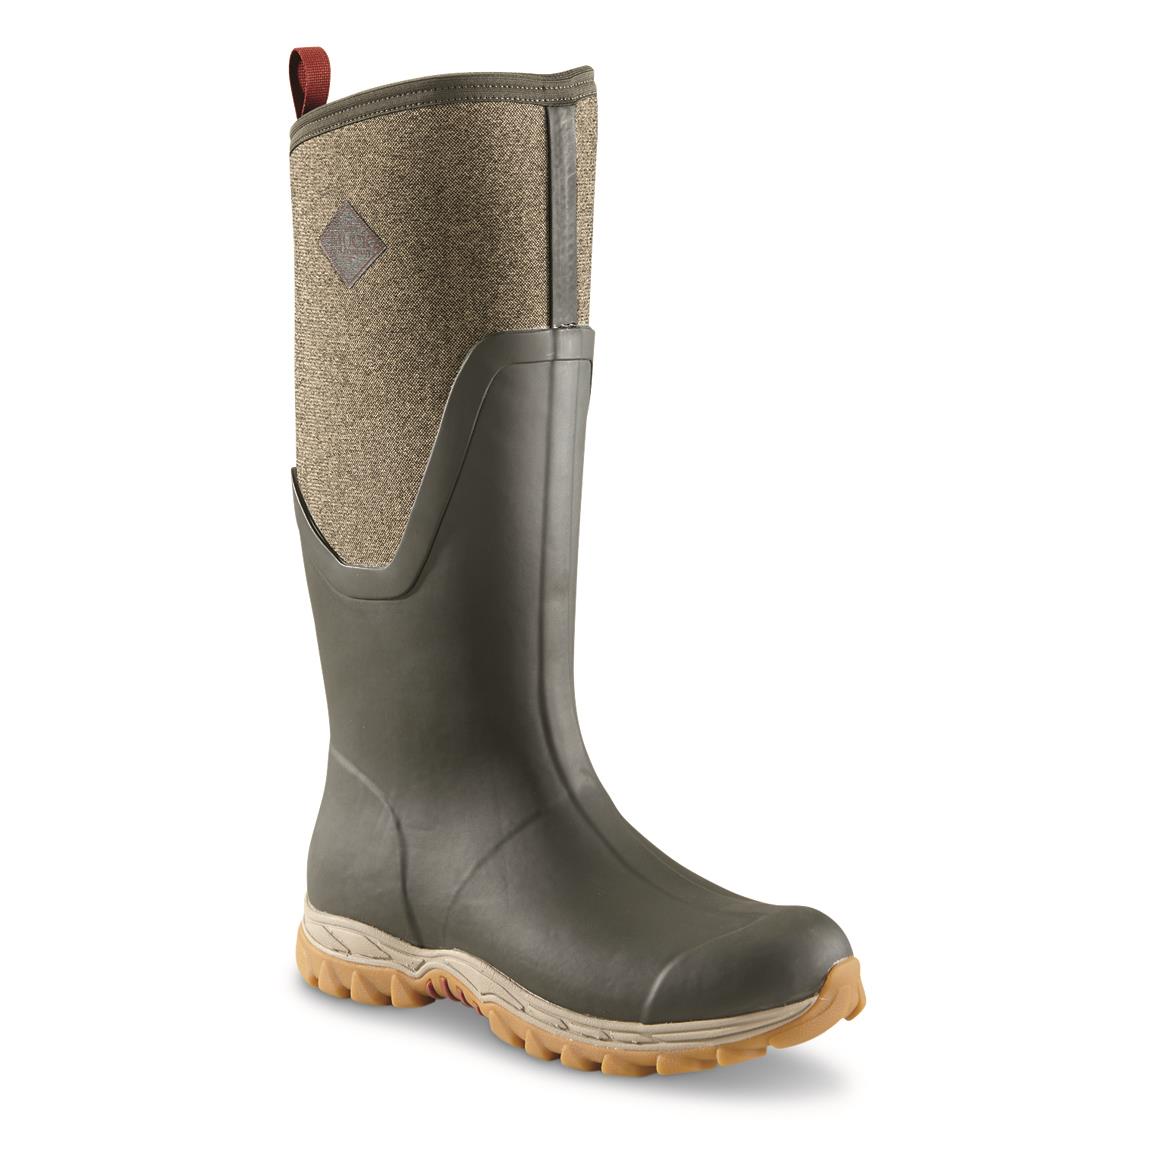 Muck Women's Arctic Sport II Tall Waterproof Insulated Boots, Drk Olive/herringbone